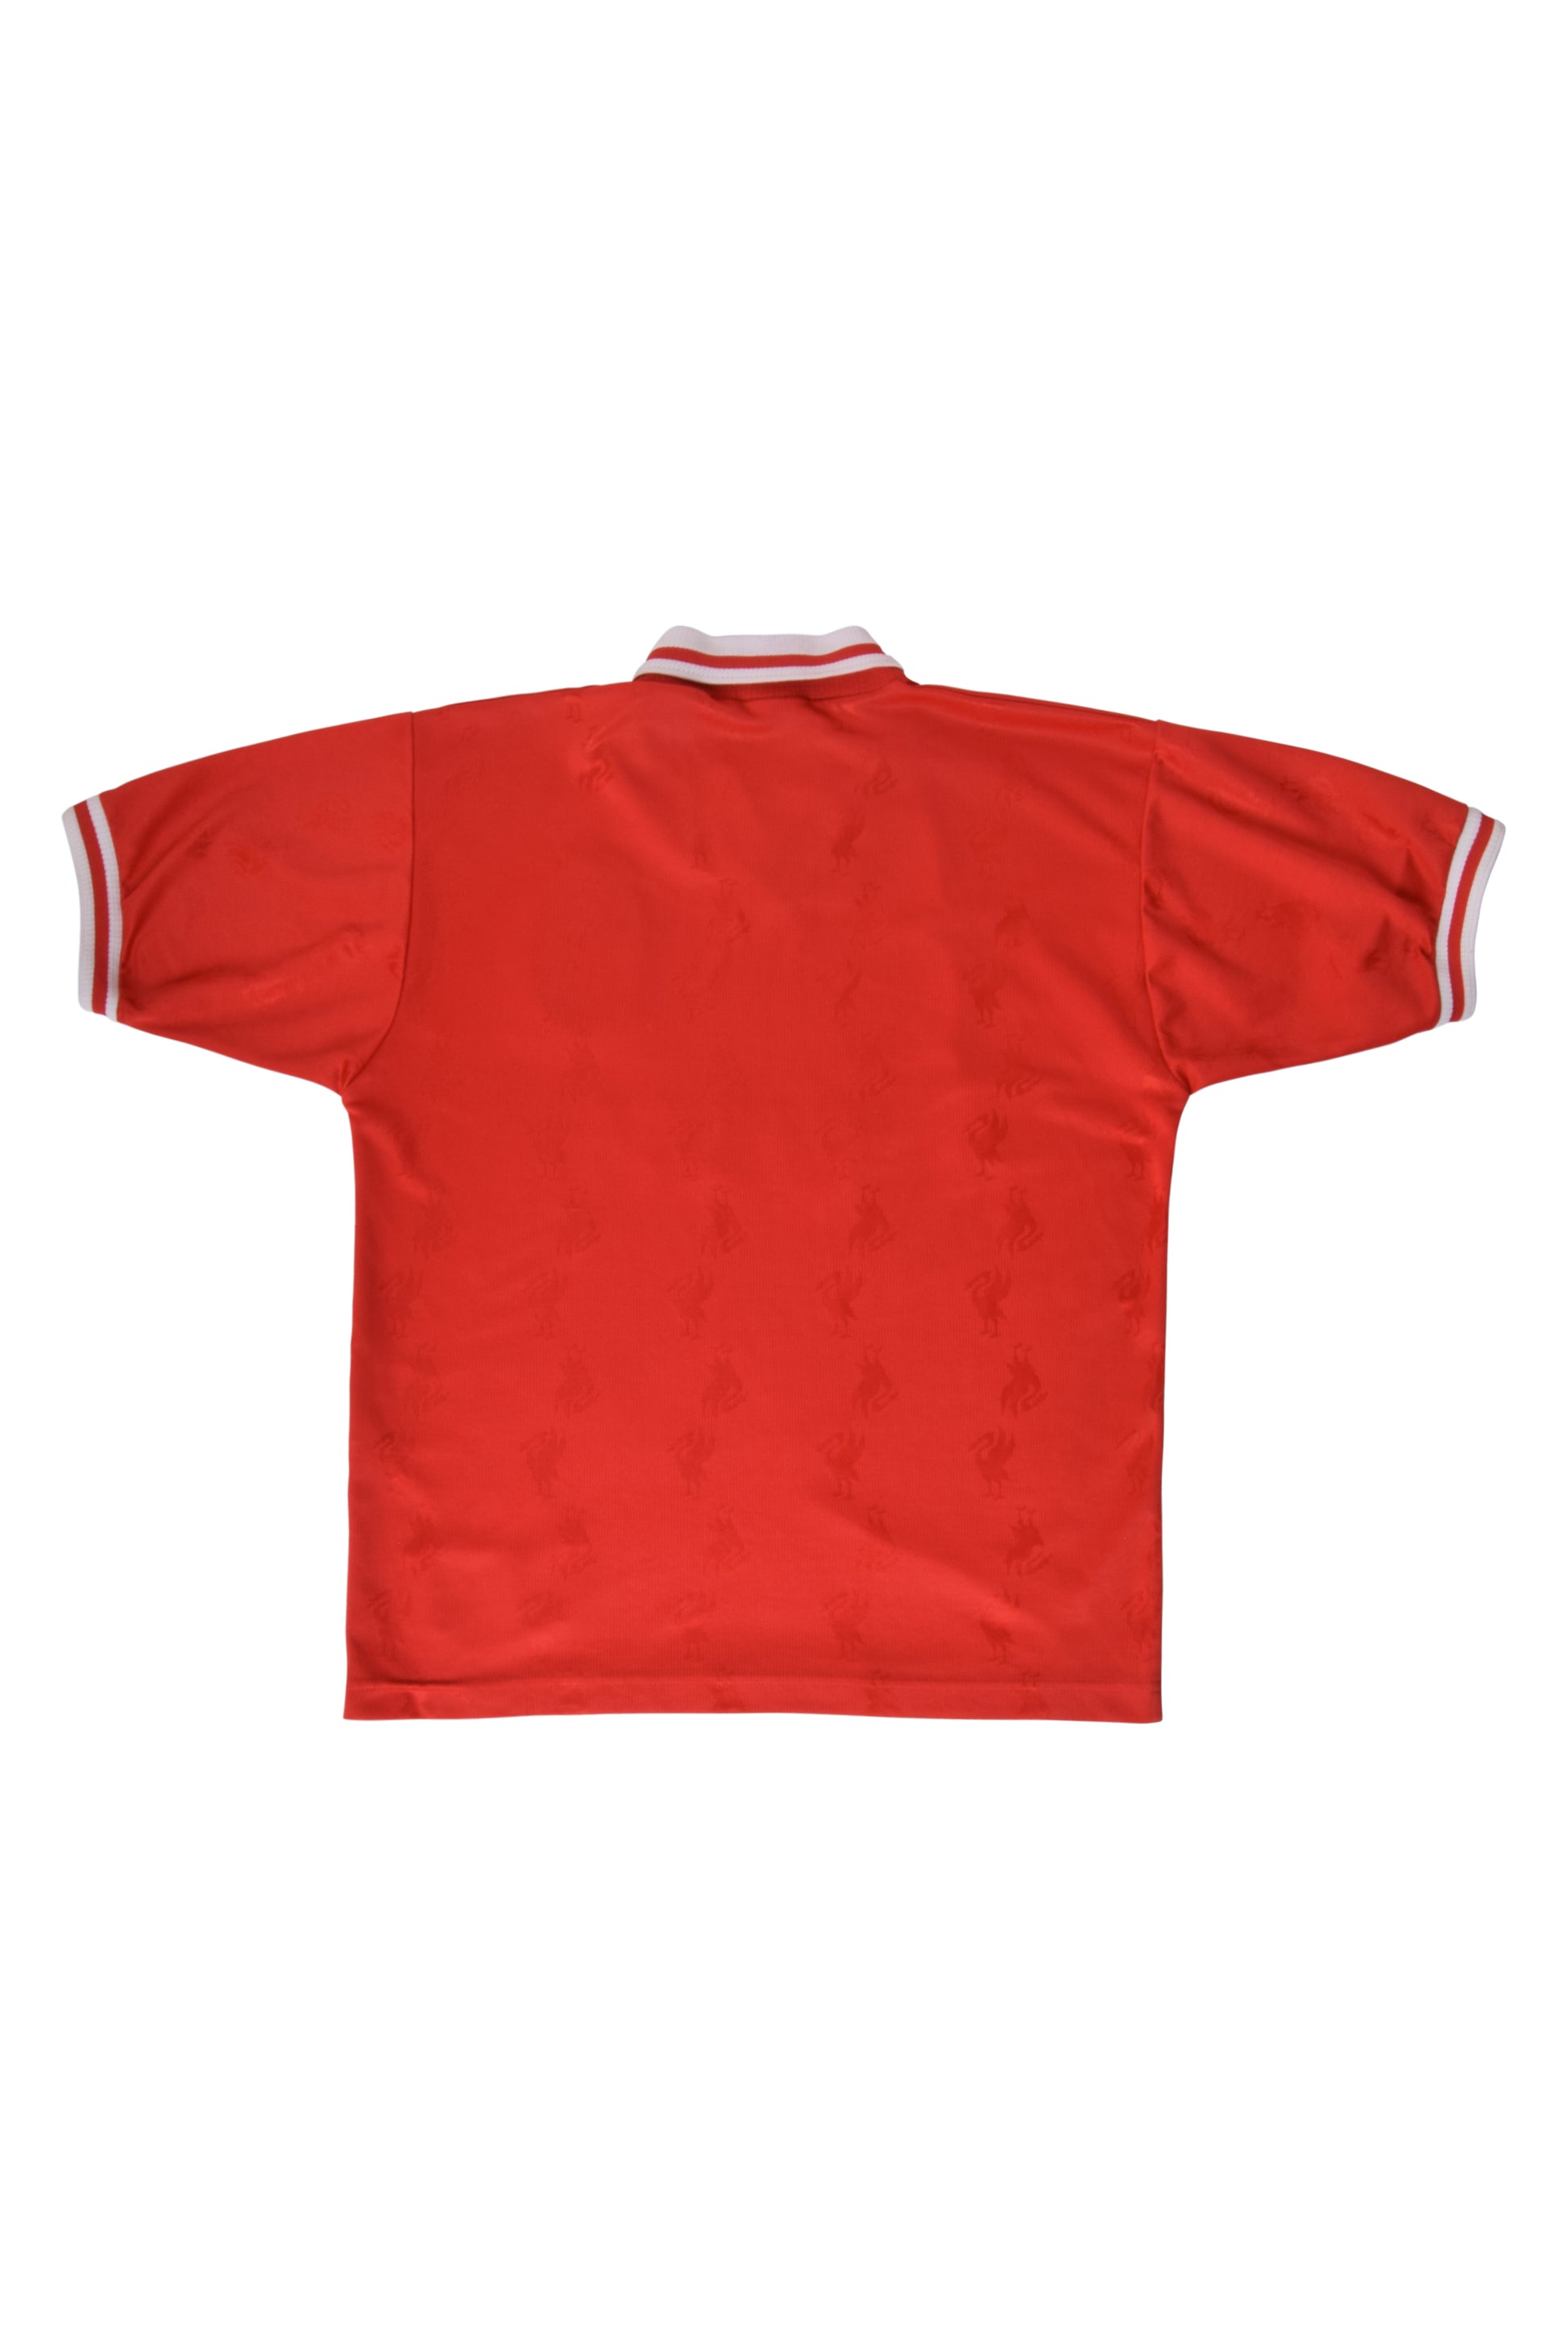 Vintage Liverpool Reebok 1996-1998 Home Football Shirt Red Carlsberg Size XL-XXL